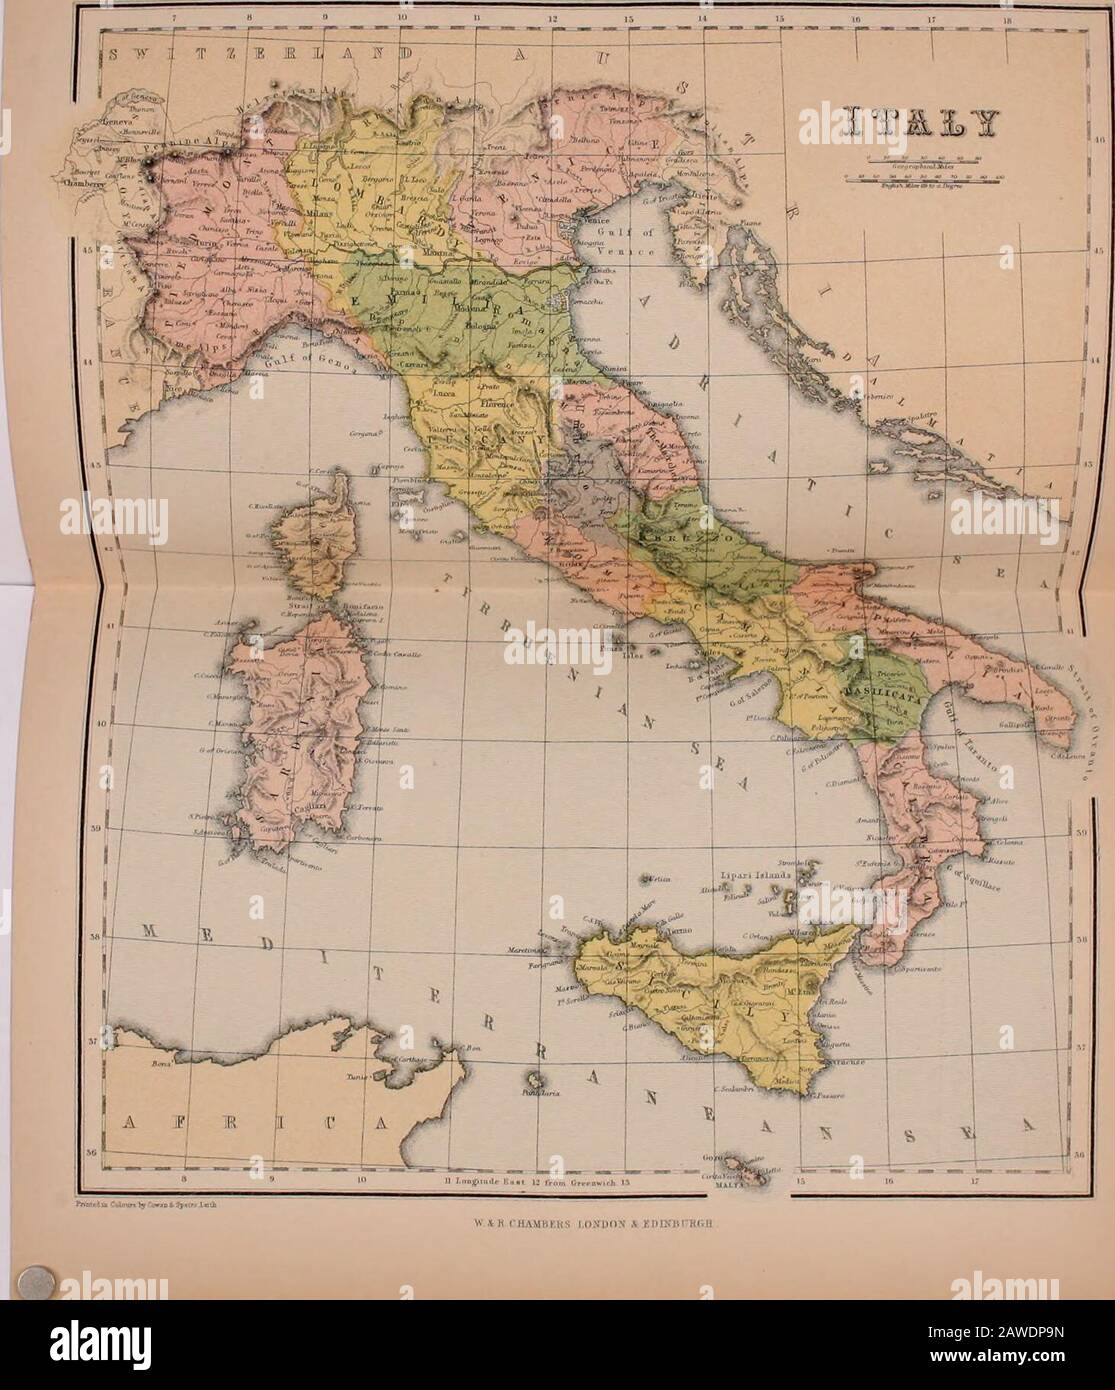 Chambers's encyclopædia; a dictionary of universal knowledge . 231,914907,714541,733375,103696,328 2,752,797 319,164 604,365 493,263 1,416,792 501,880. ITALY. Provinces. Area in F.ng.bq. Miles. PopulatioQinlSTl. 60. Calabria Citra (Ciisenza), . 61. - II Ultra 1. (Reggio), . 62. w / II. (Catanzuroi, 2,856-381,129-072,308-49 443,483353,606412,2^6 Calabria, .... 6.293-94 1,209,315 63. Caltanisetta, 64. Catania 6o. Girgenti, .... 66. Messina, 67. Palermo, .... 65. Siraeusa {Nolo), , 63. Trapani, .... Sicily, Total, l,4.H-901,969-95l,49i-88l,7f)7-881,964-041,426-461,2161811,290-3J 109,738-61 230,06 Stock Photo